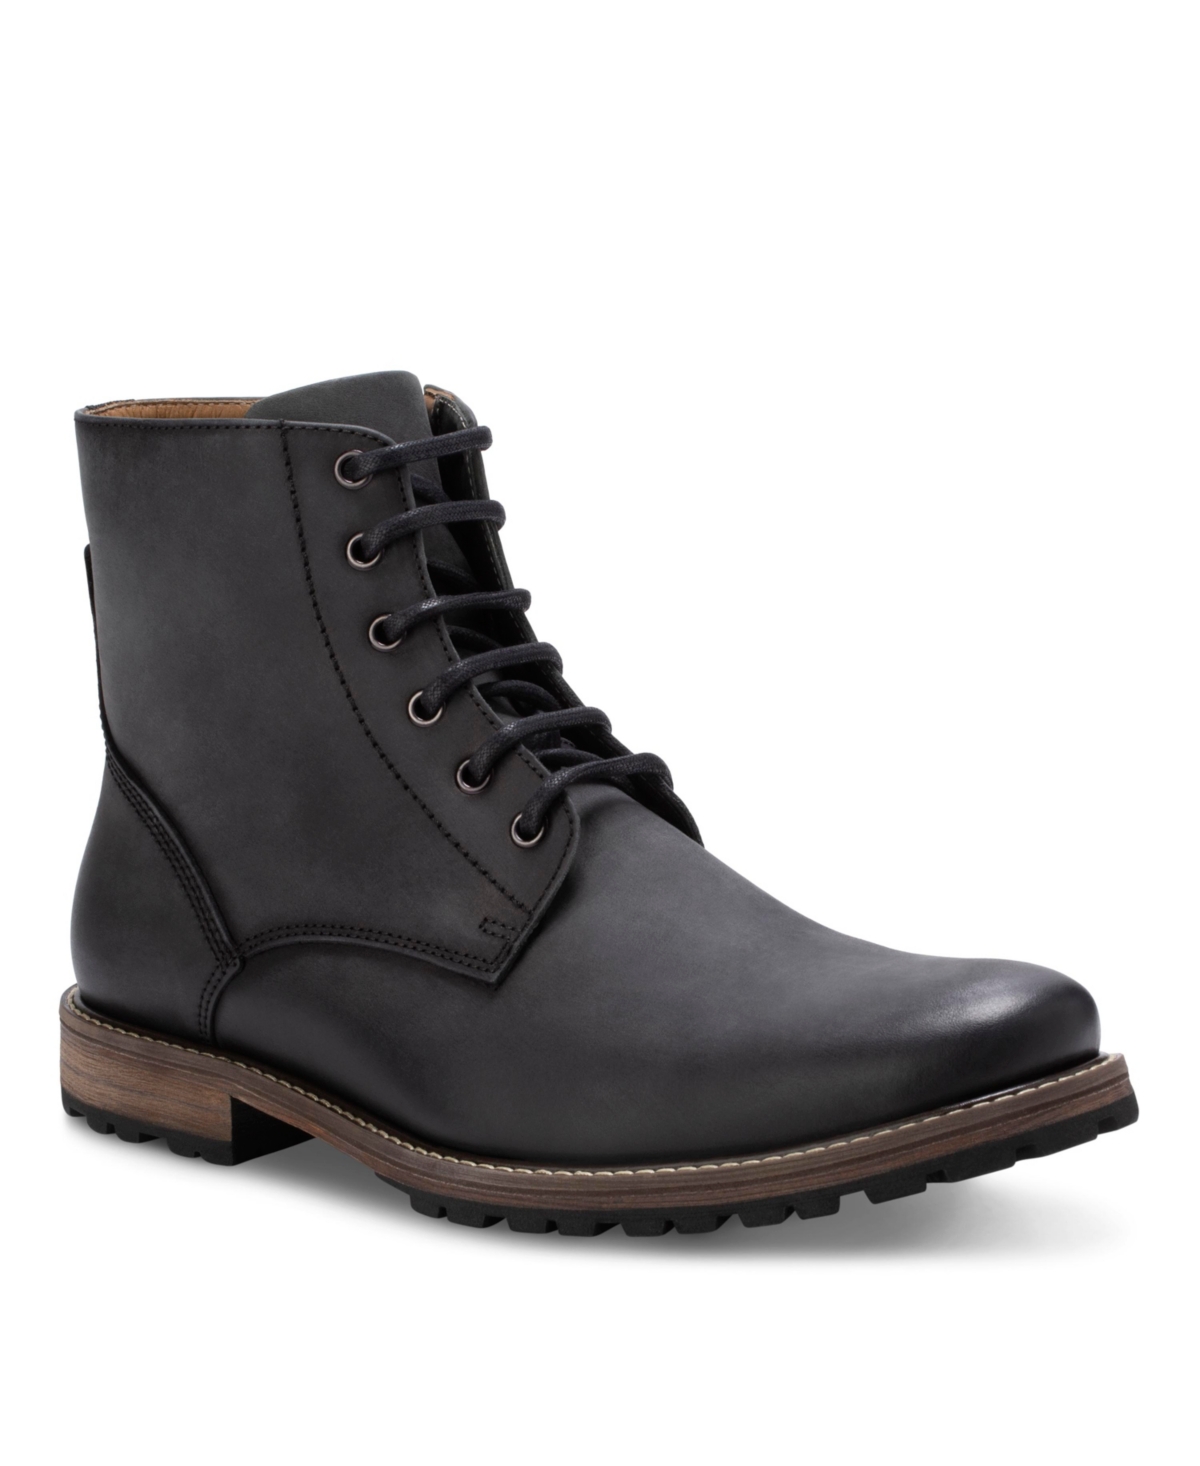 Men's Hoyt Leather Lace-Up Ankle Boots - Black